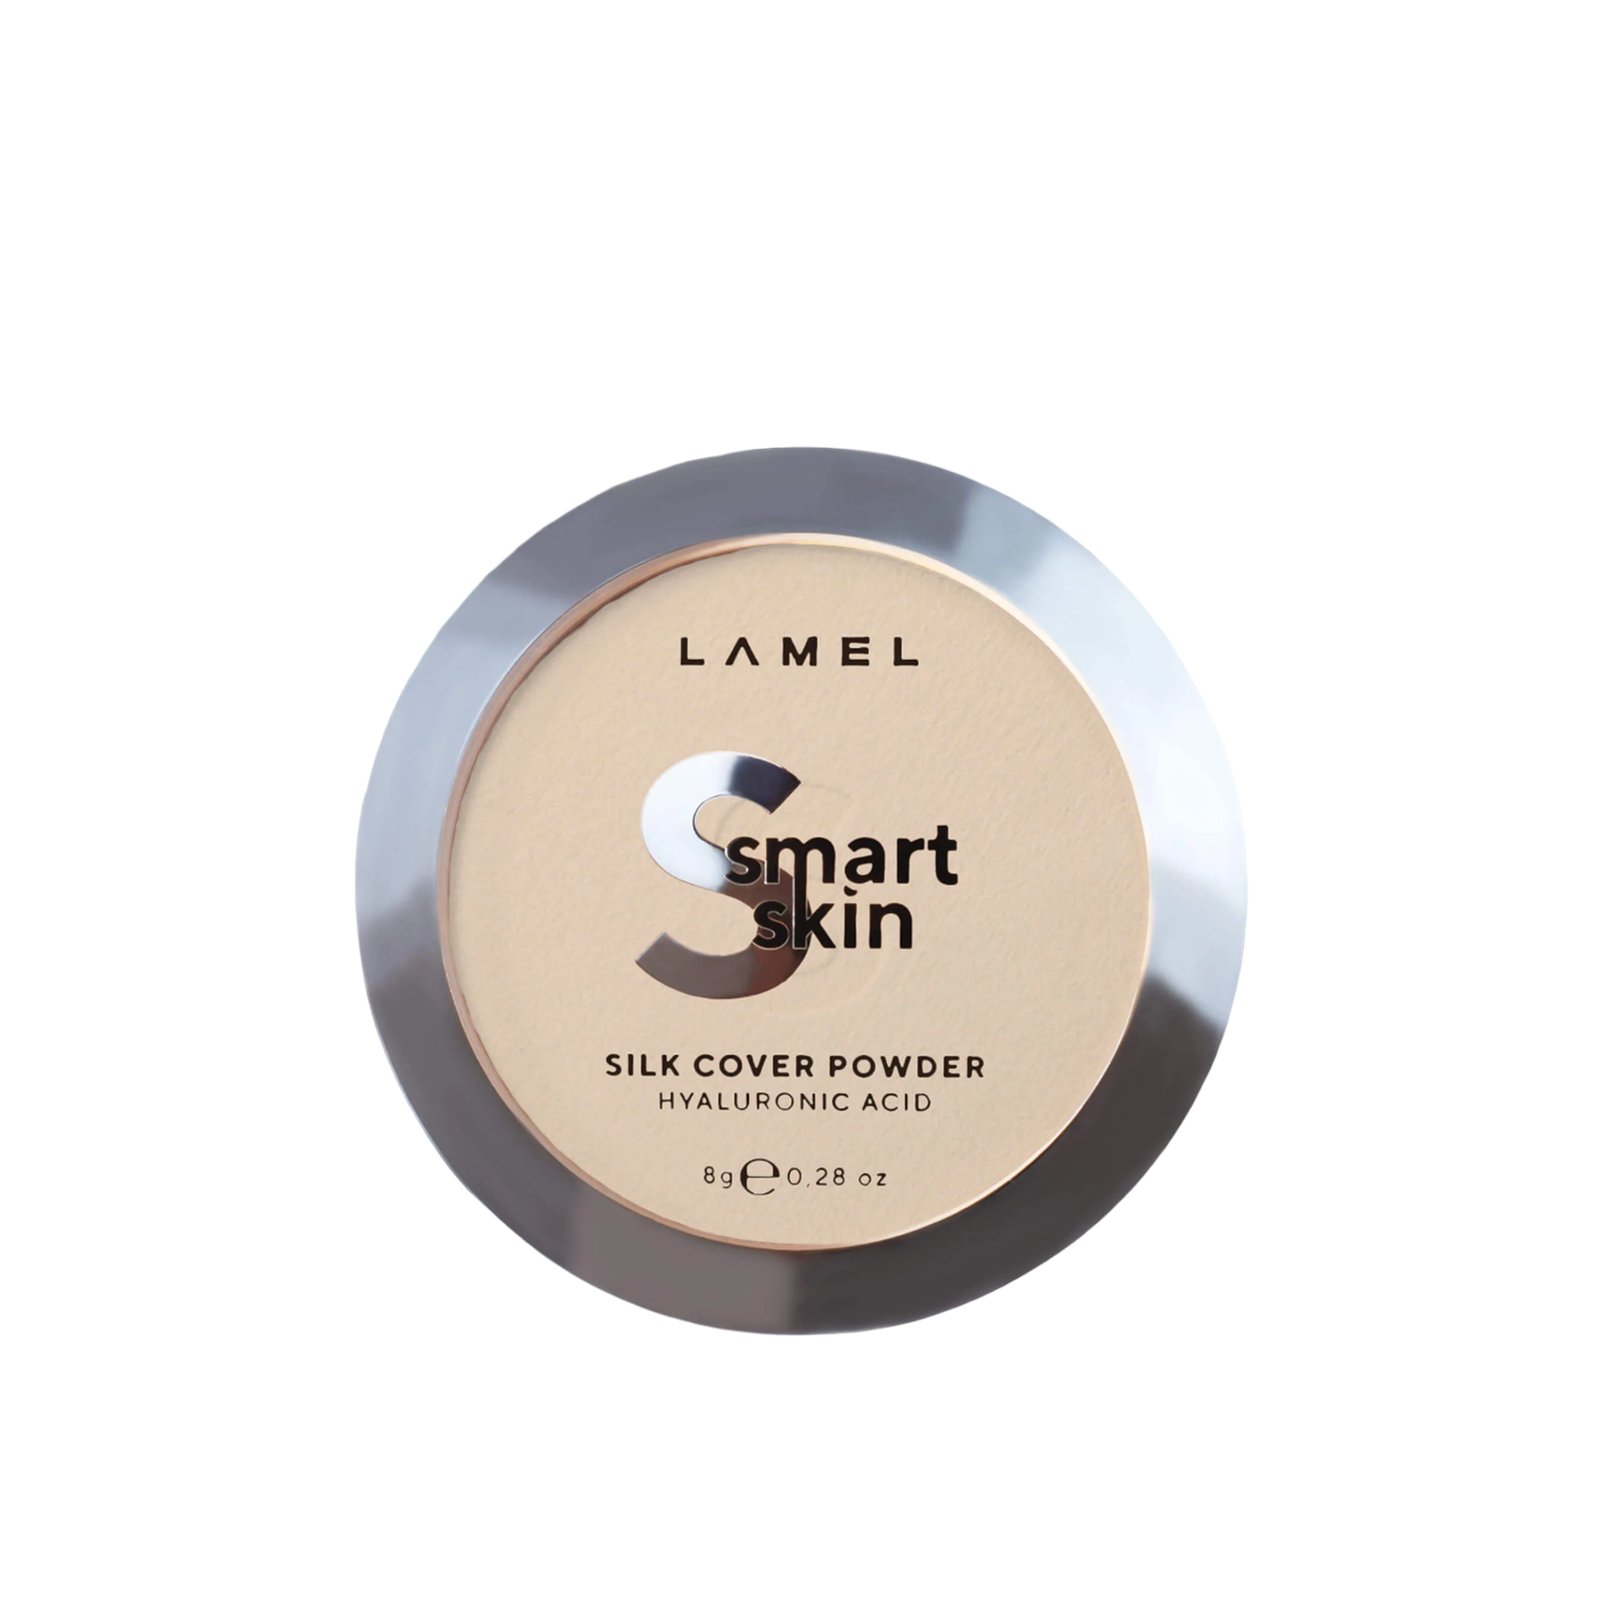 Lamel Smart Skin Silk Cover Powder